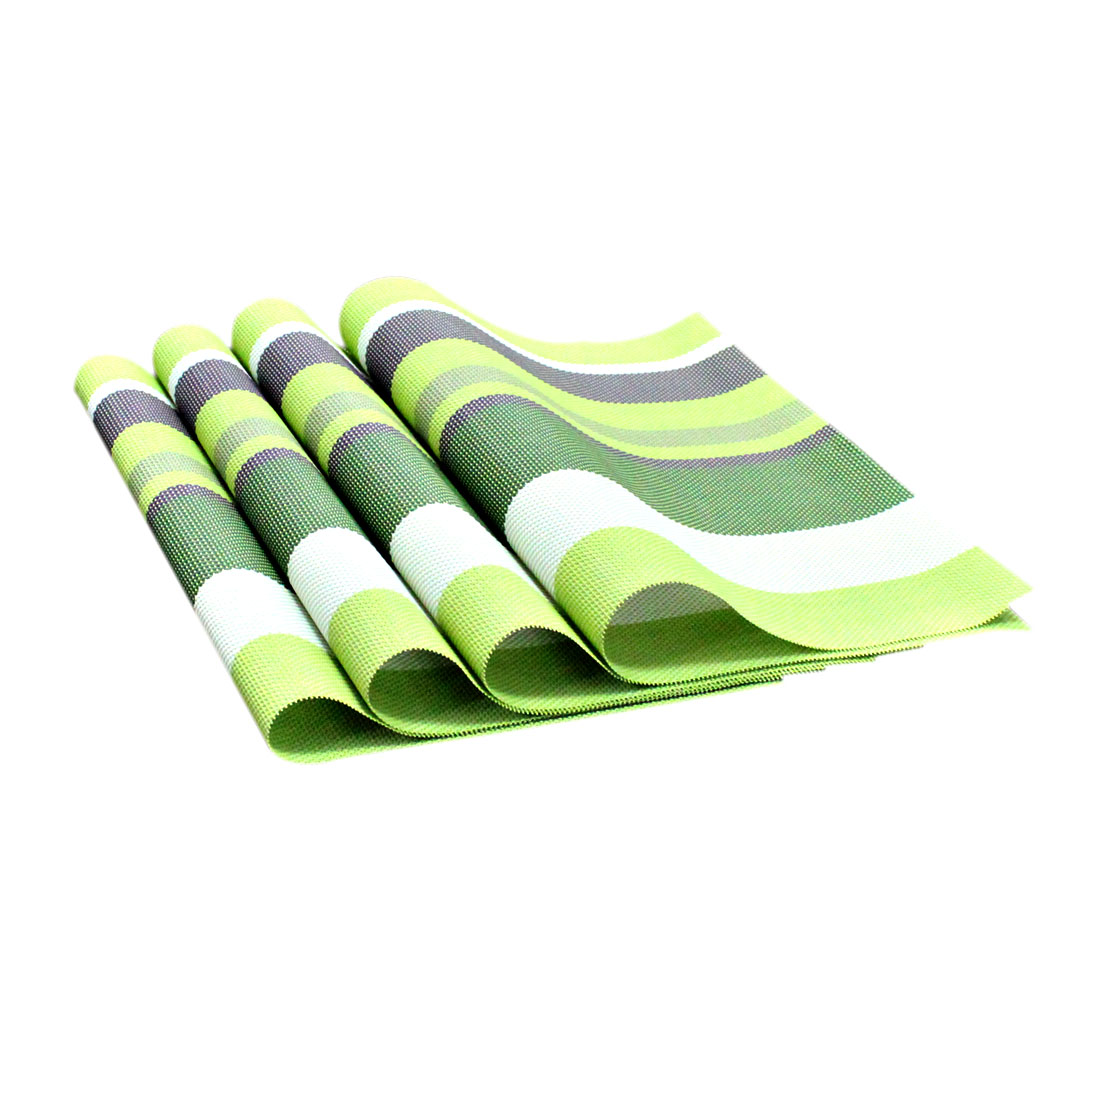 ORKA PVC Dining Table Placemat 4-Piece  Set - Multicolour  